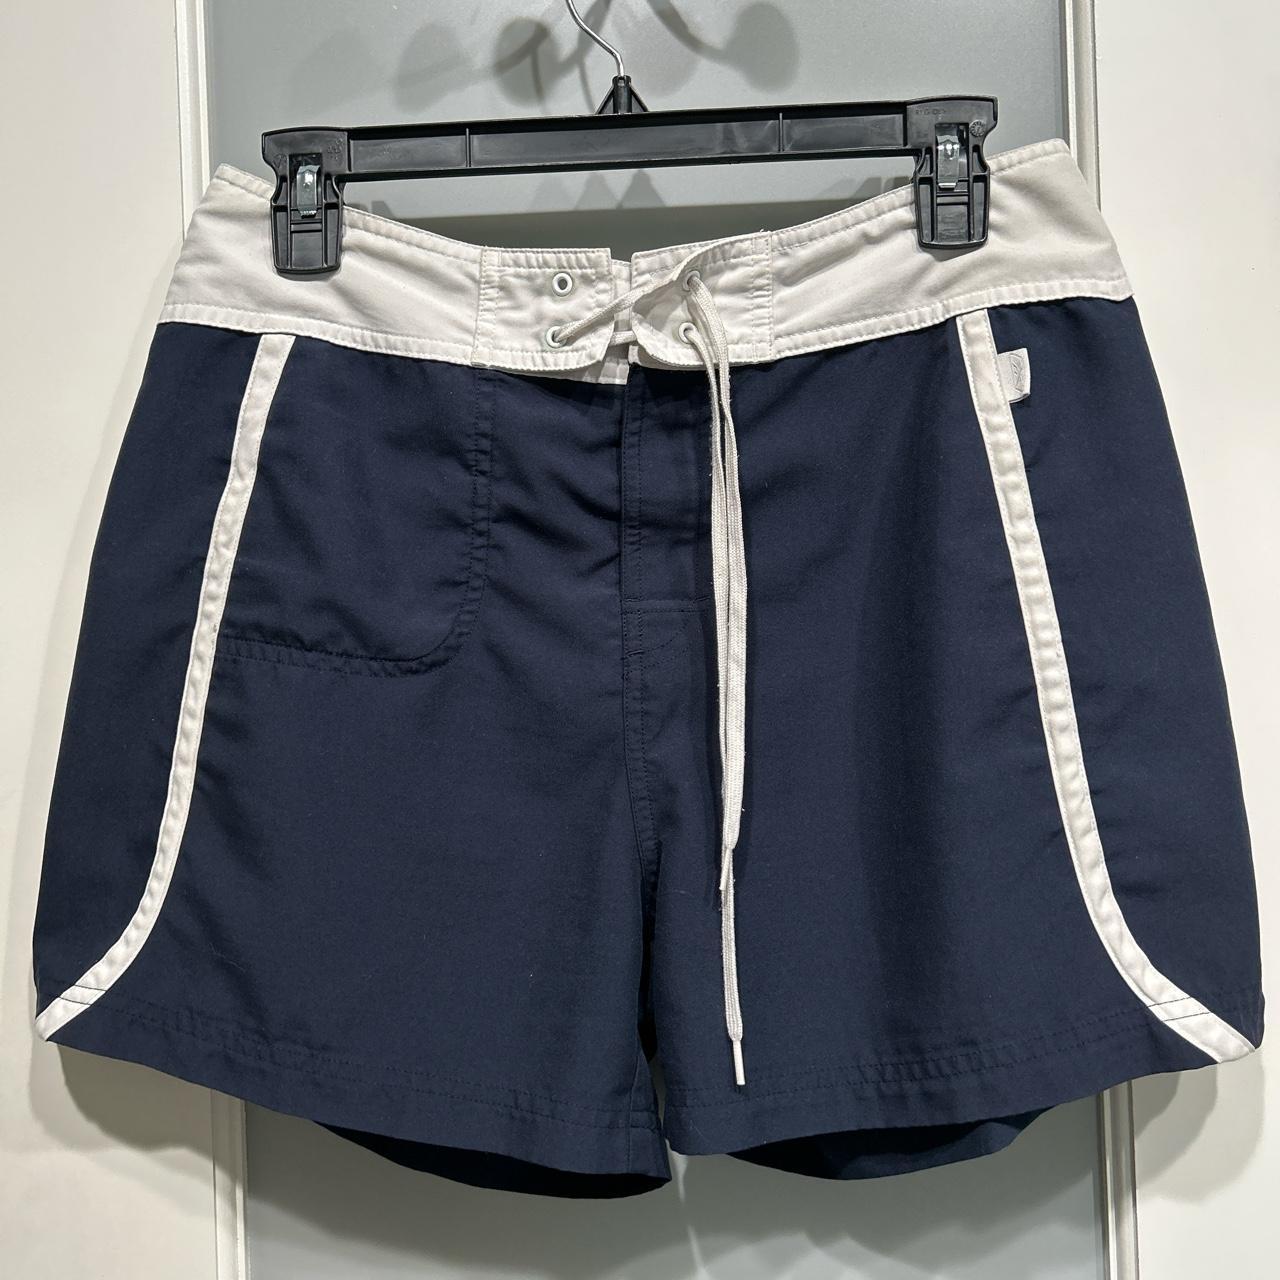 Vintage Reebok board shorts Size medium Some... - Depop